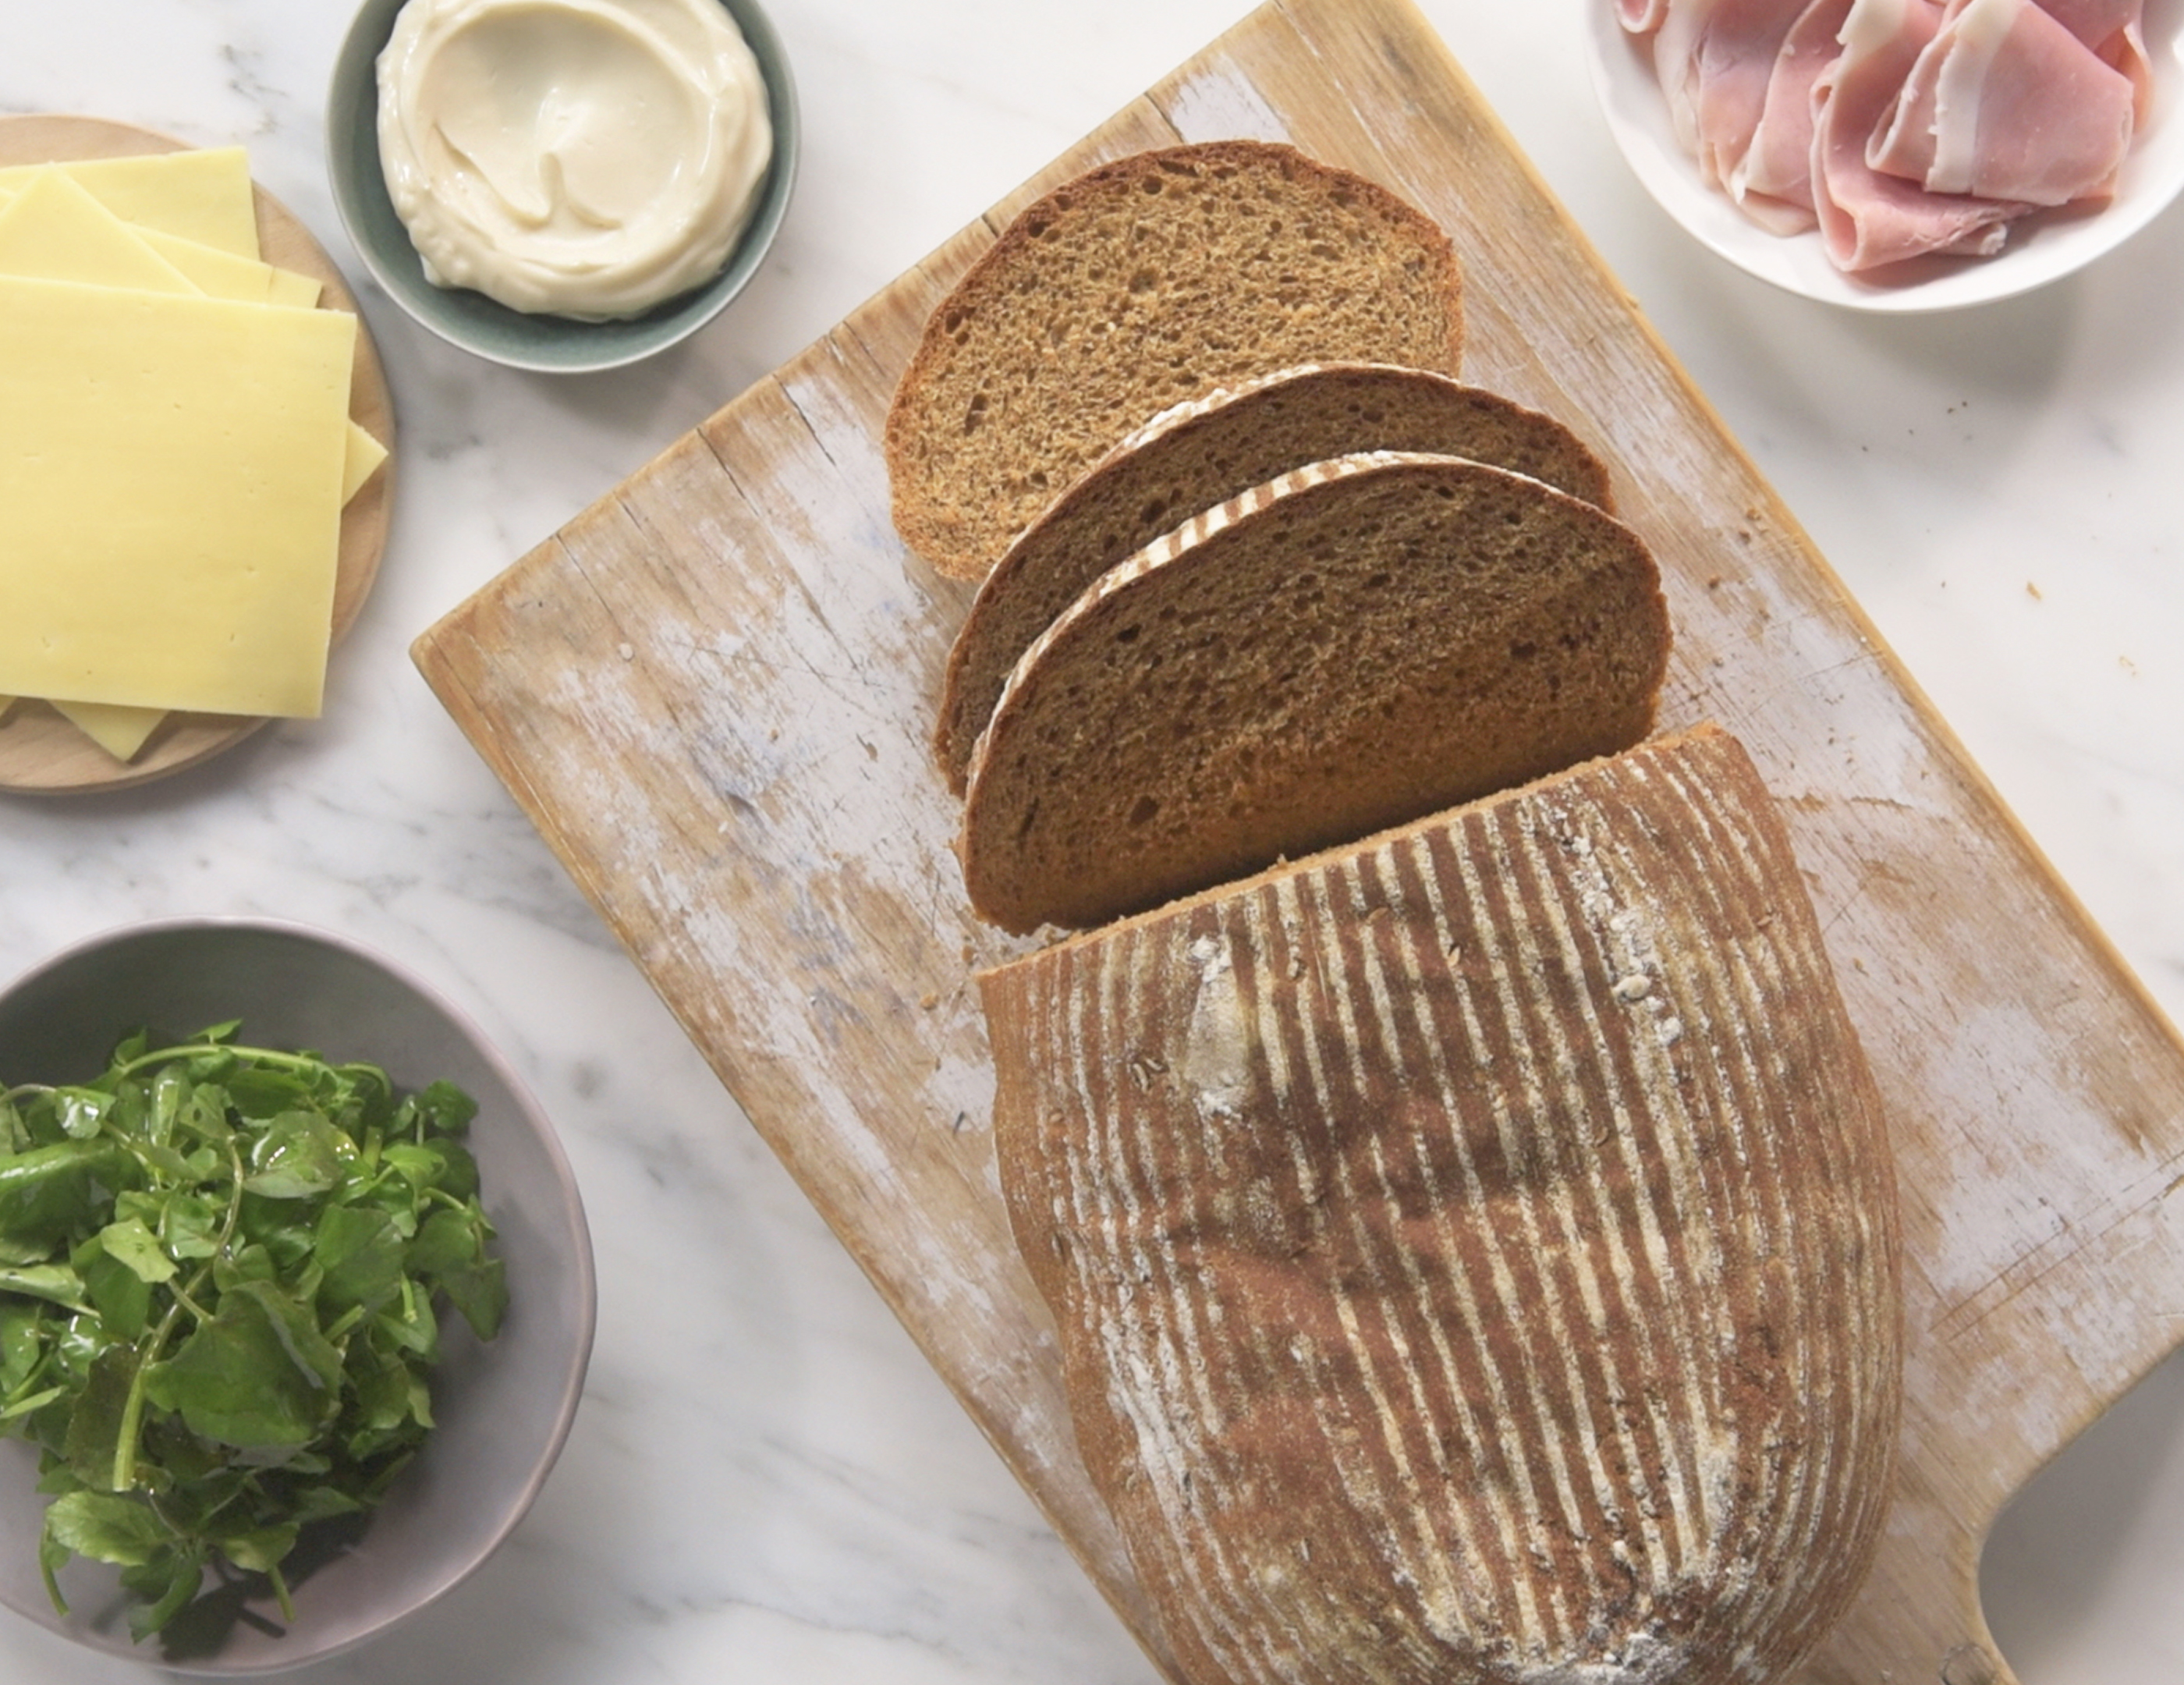 https://prod-app.breville.com/original/recipe/1650590691/Rye+and+Caraway+Bread.jpg